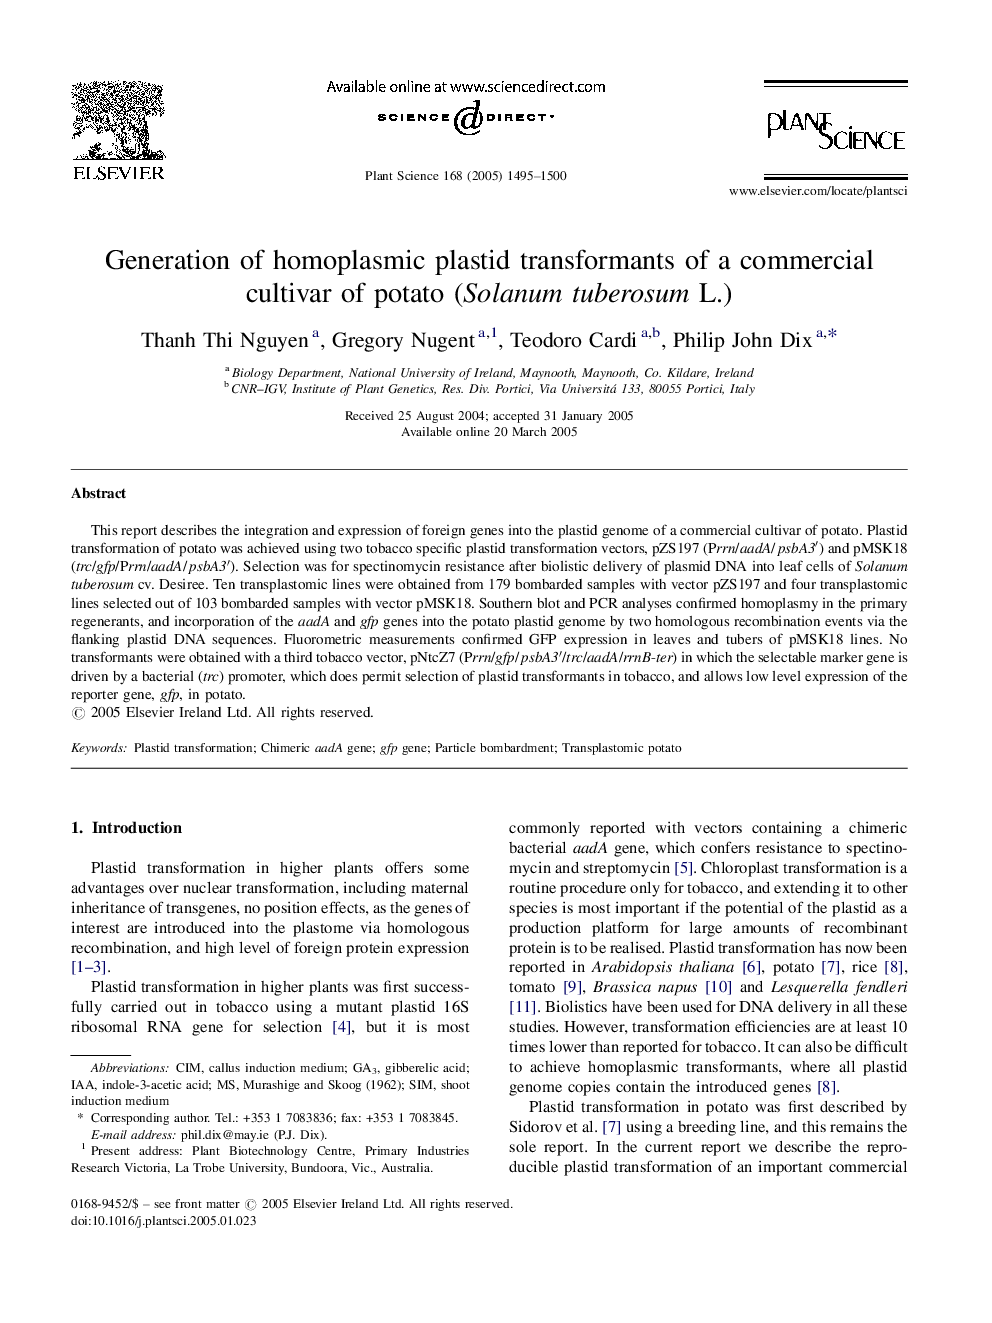 Generation of homoplasmic plastid transformants of a commercial cultivar of potato (Solanum tuberosum L.)